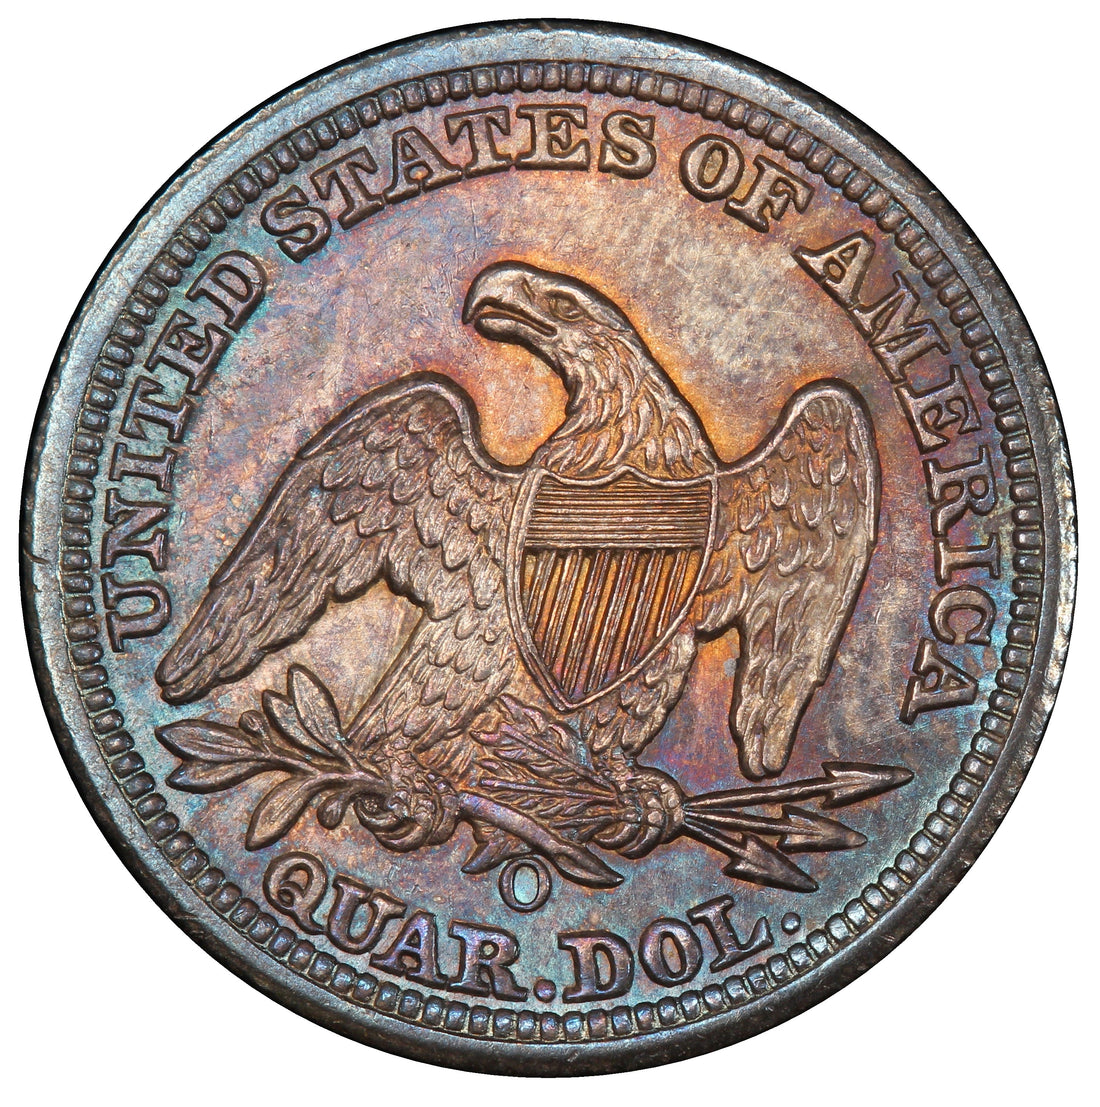 Coin Grading Service Near Me - American Rarities